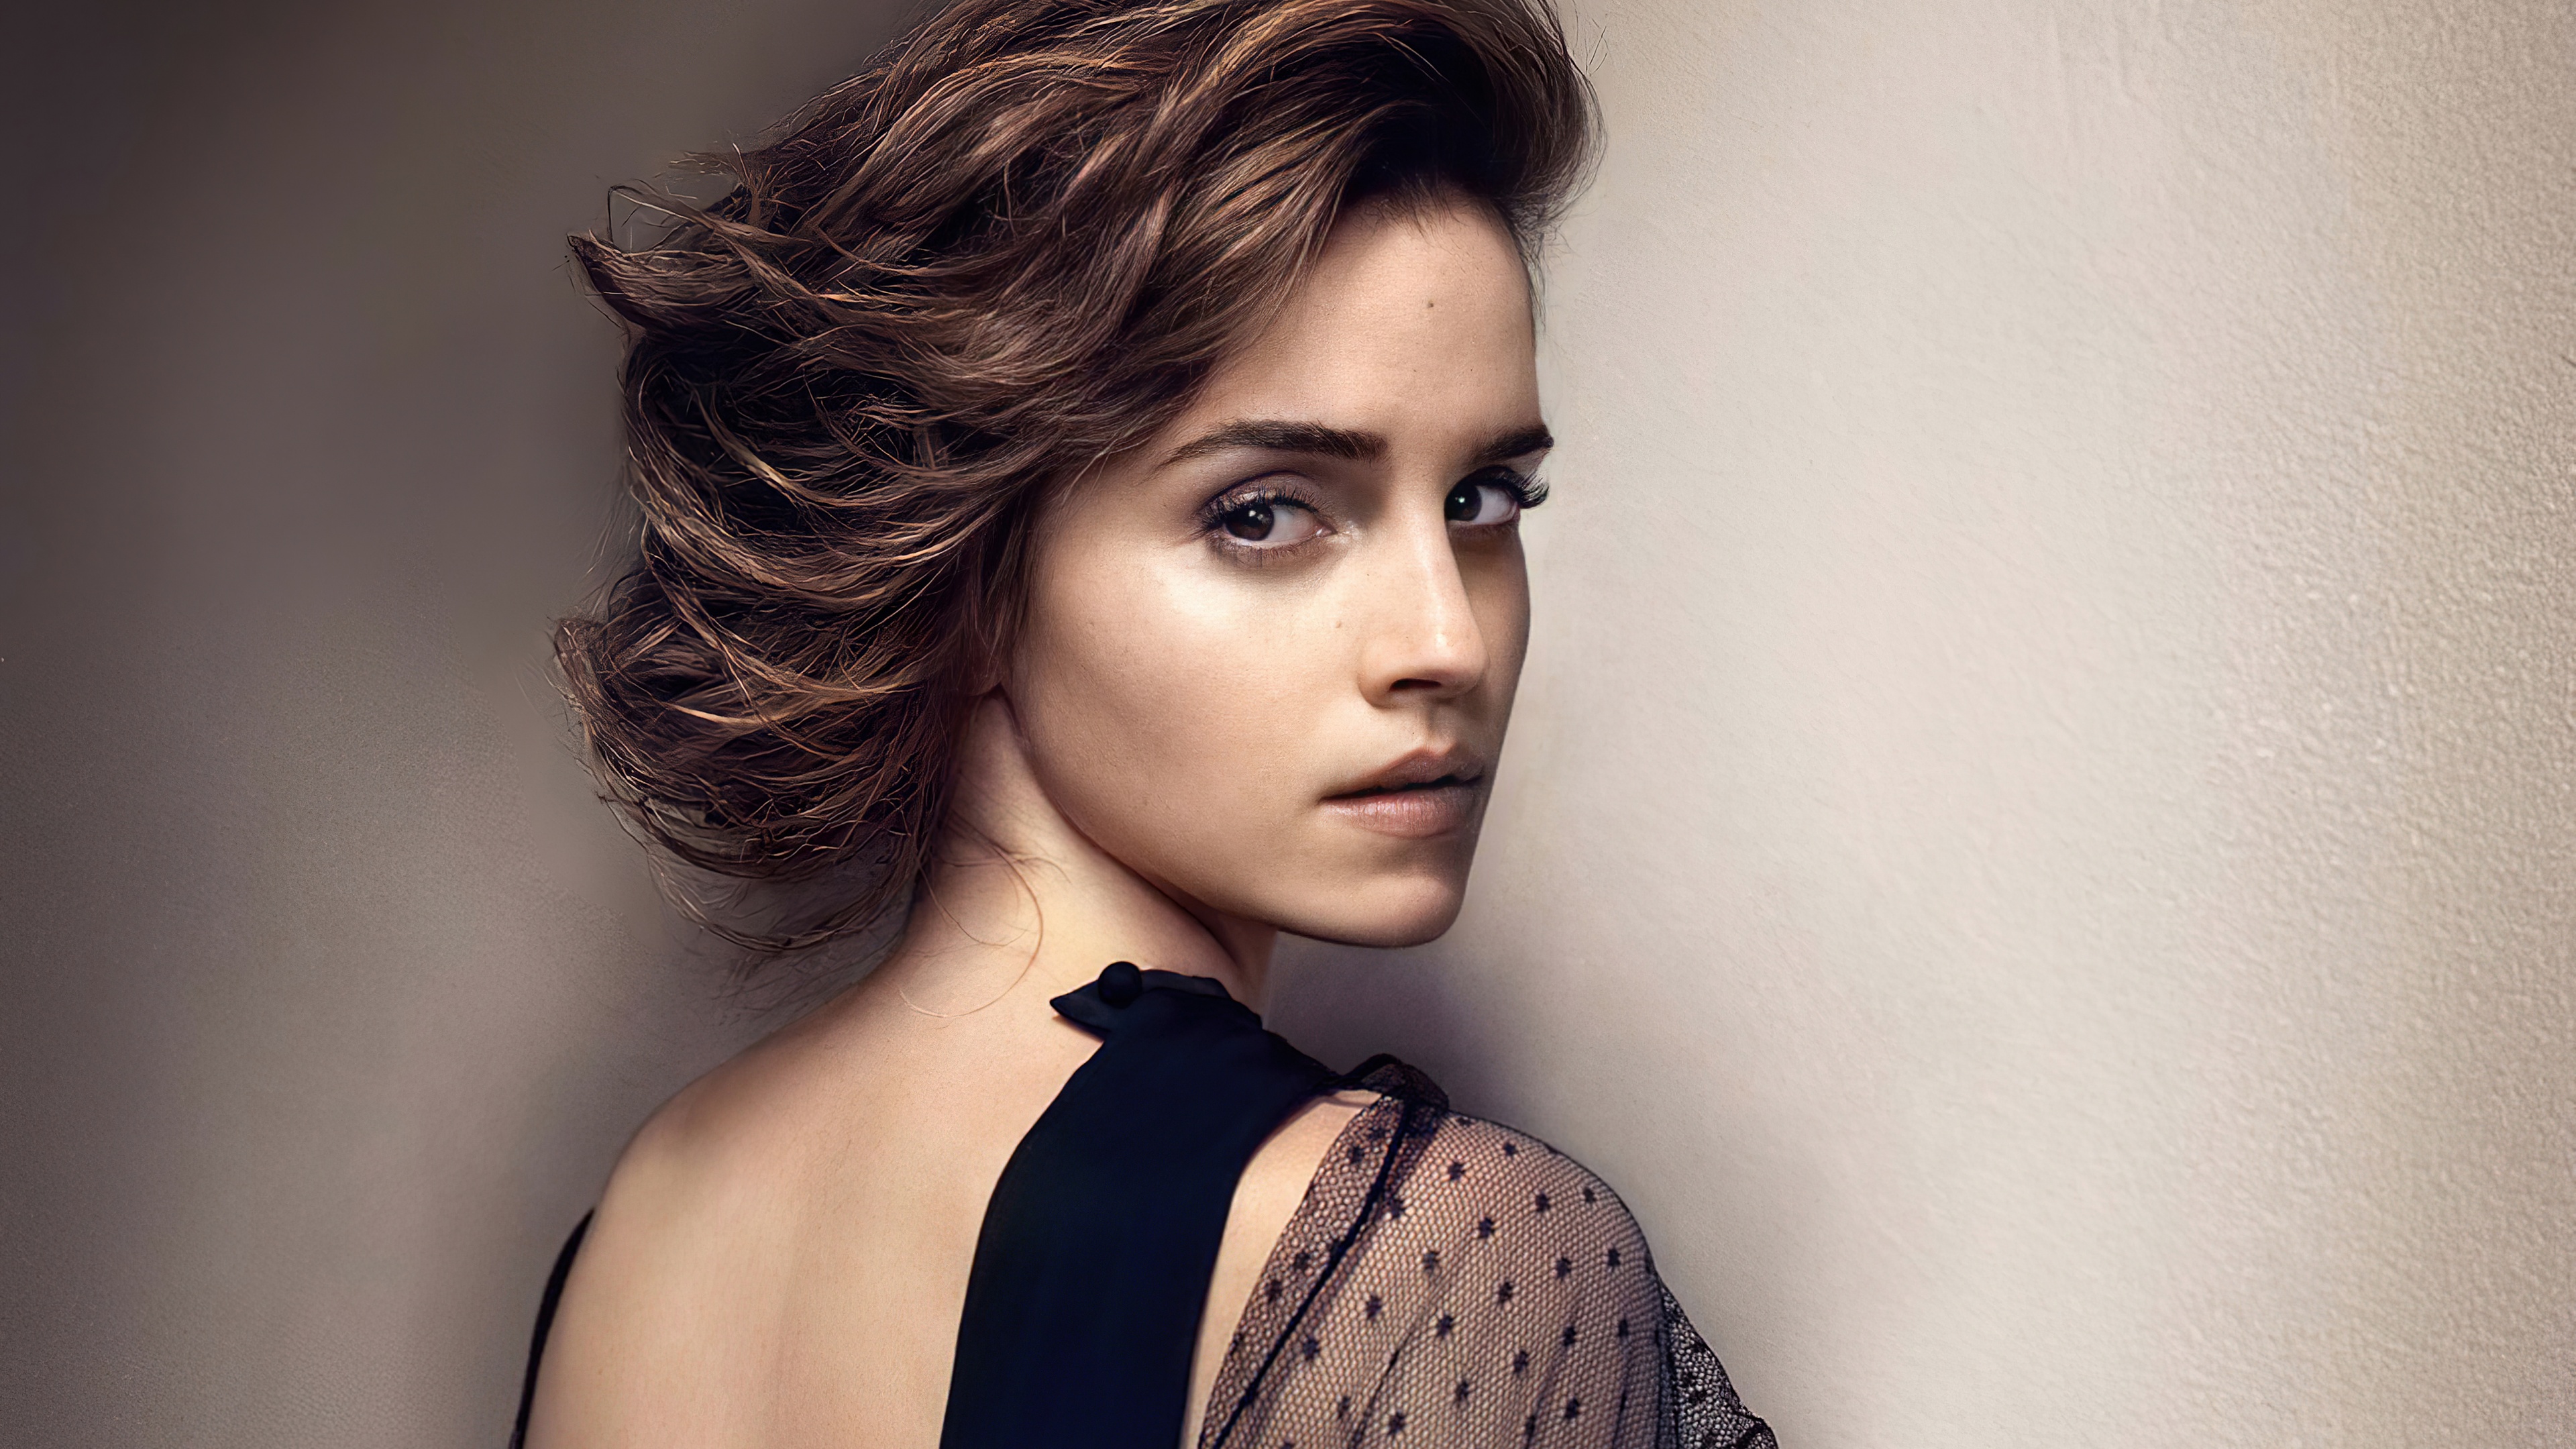 Emma Watson Wallpaper. 